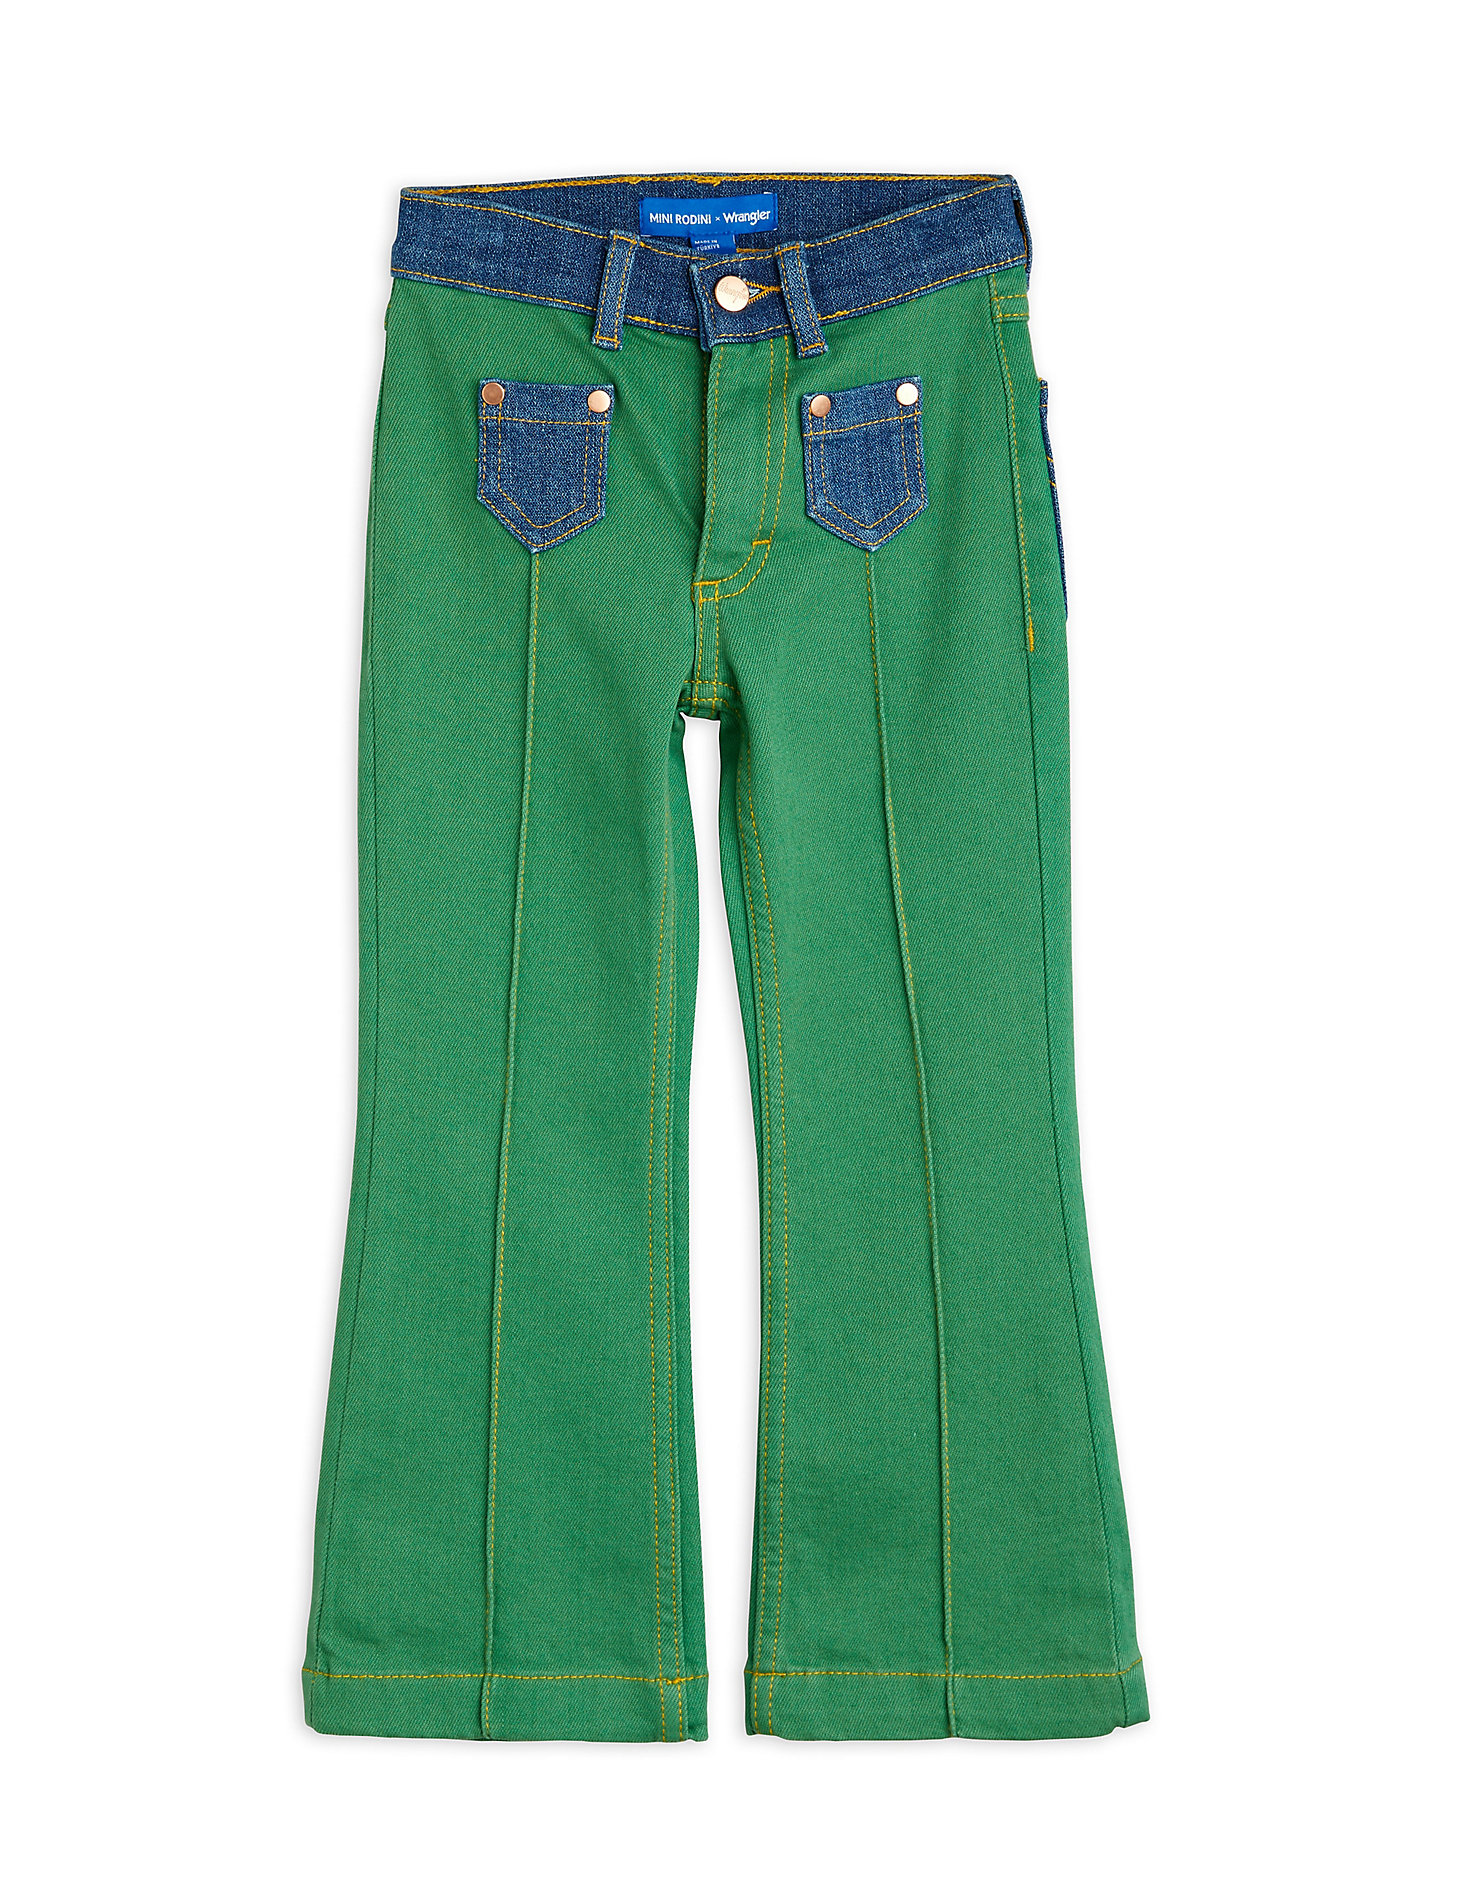 Mini Rodini x Wrangler Two-Tone Flared Jeans in Green alternative view 1